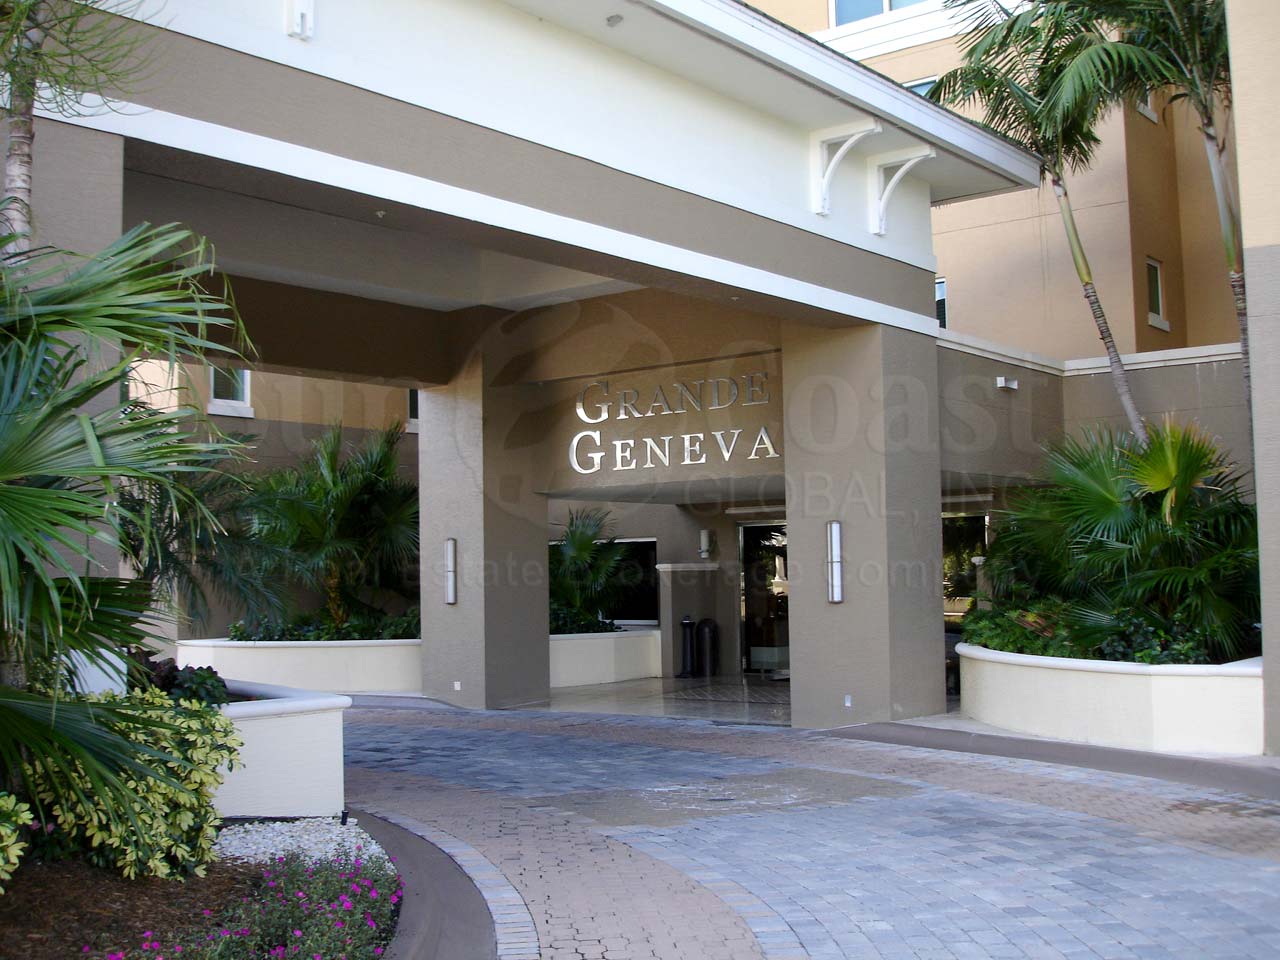 Grande Geneva Entrance